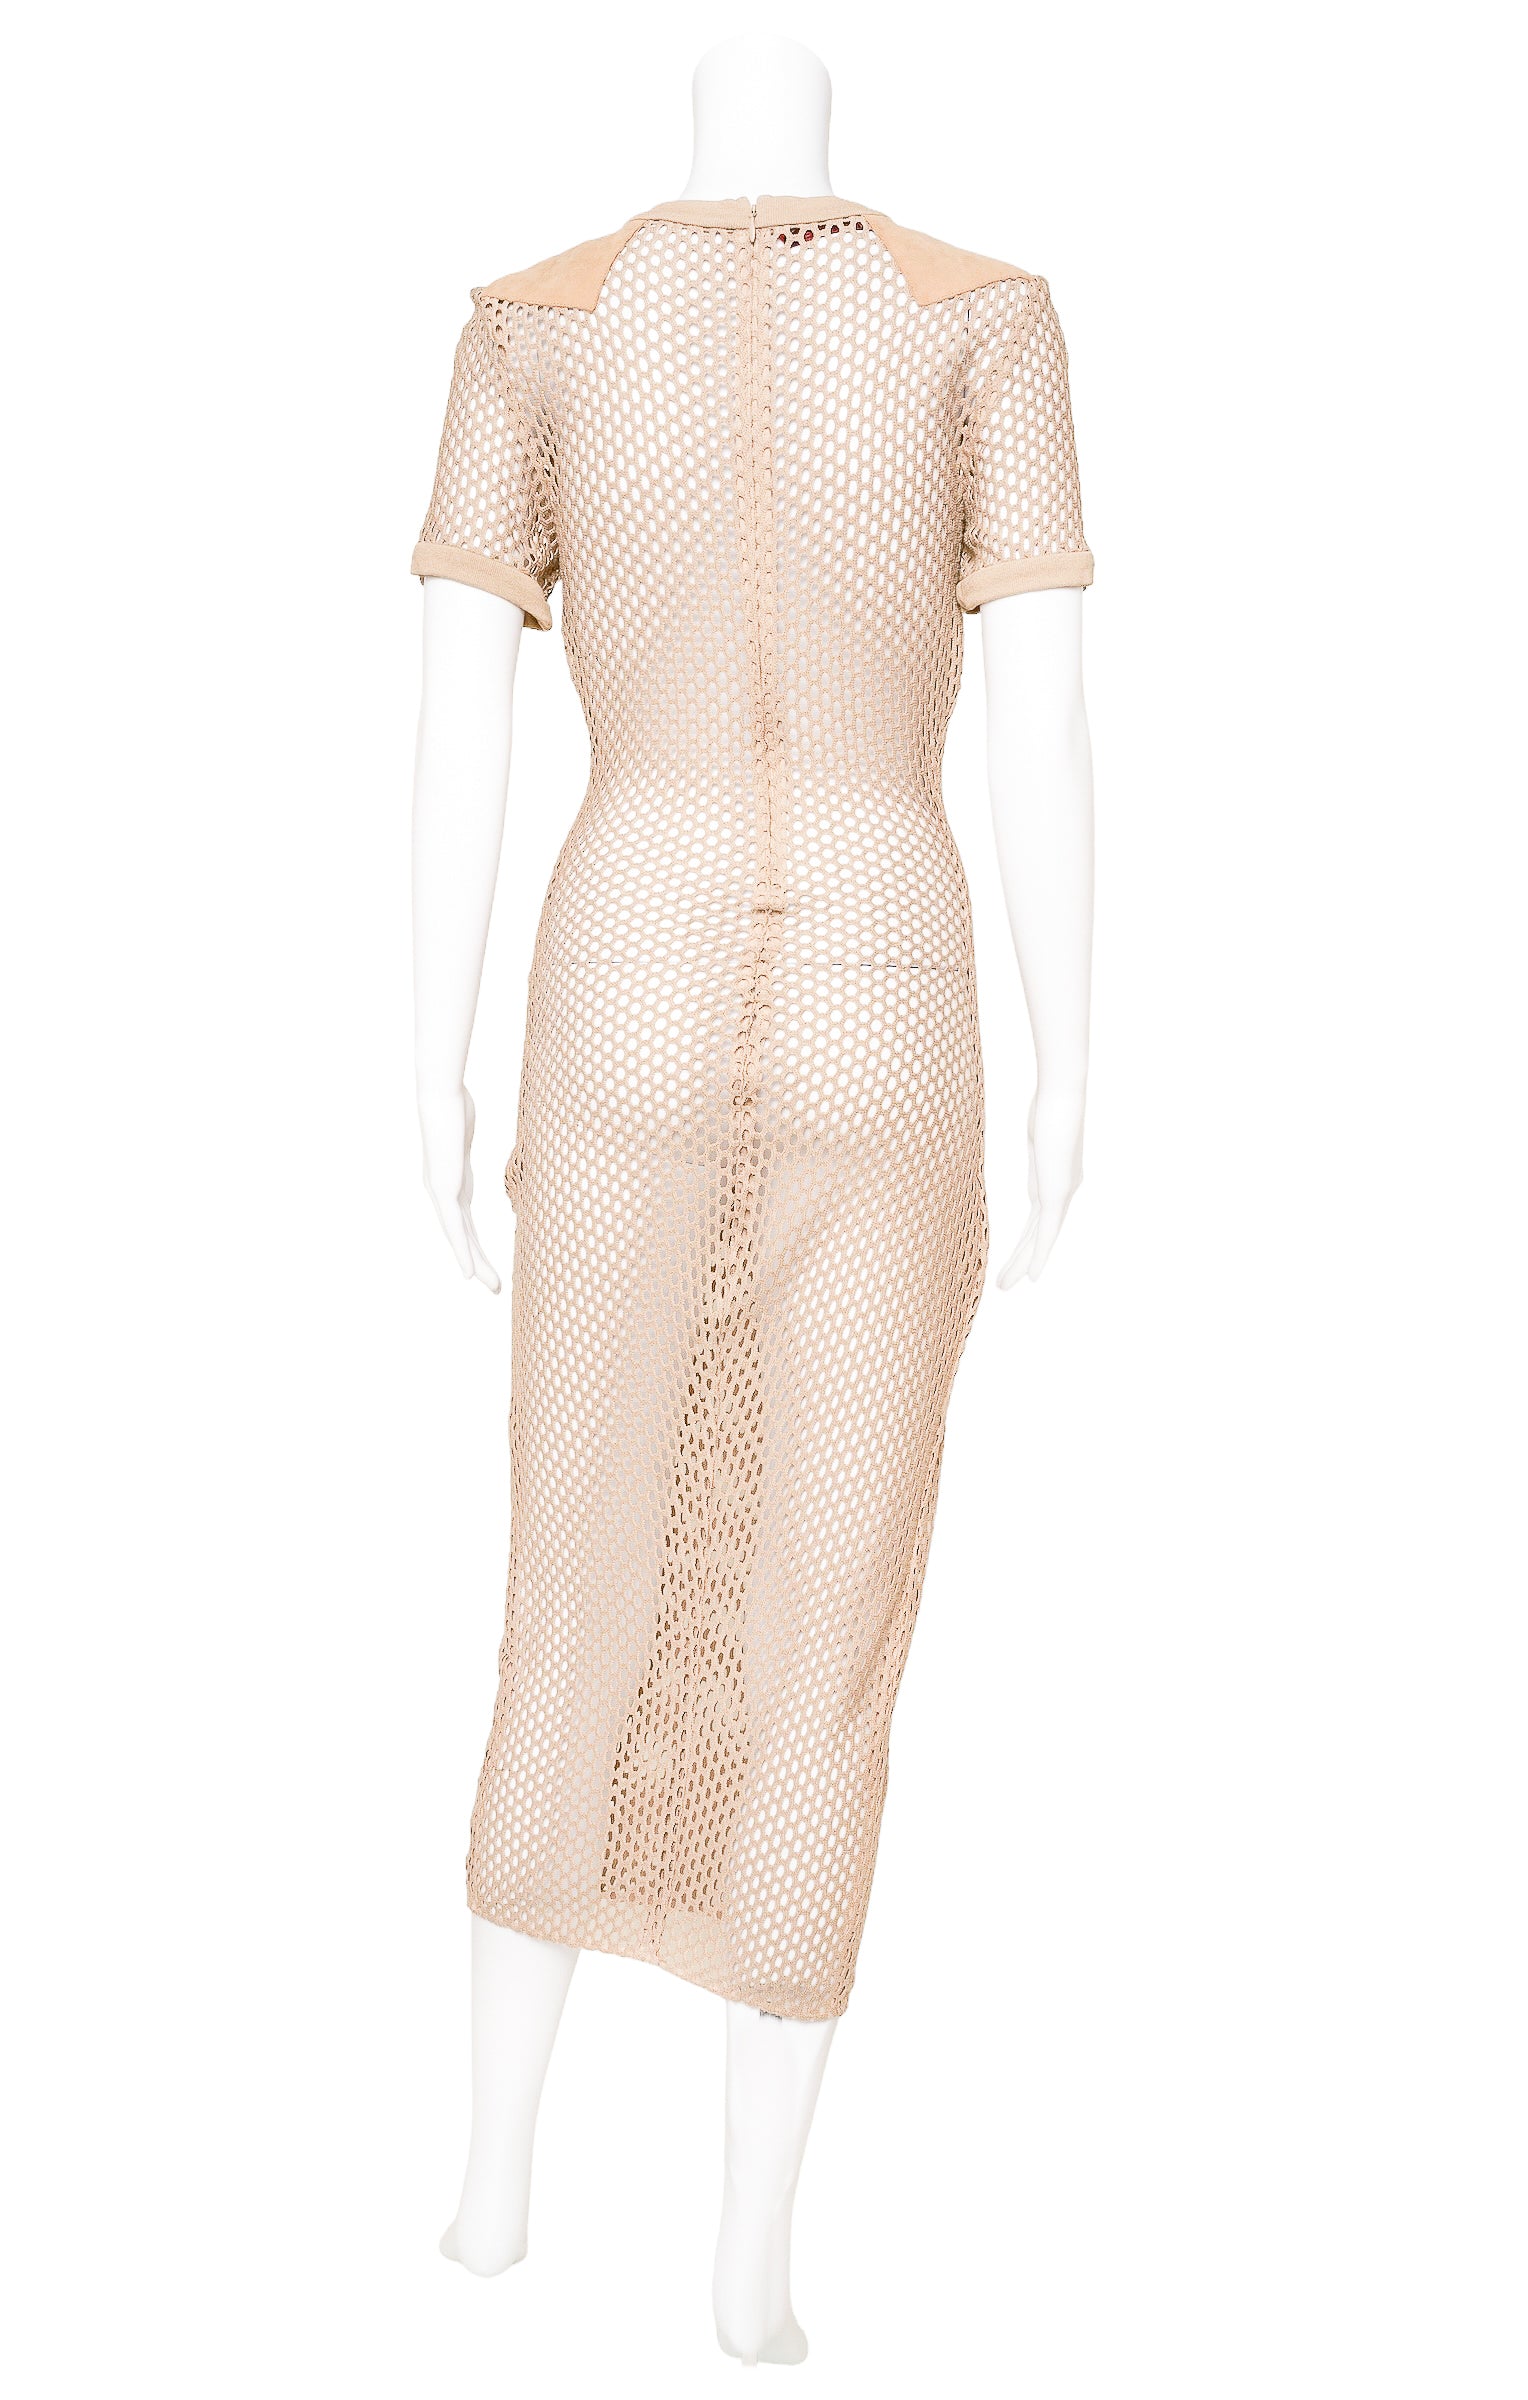 TAMARA MELLON (RARE) Dress Size: No size tags, fits like S/M